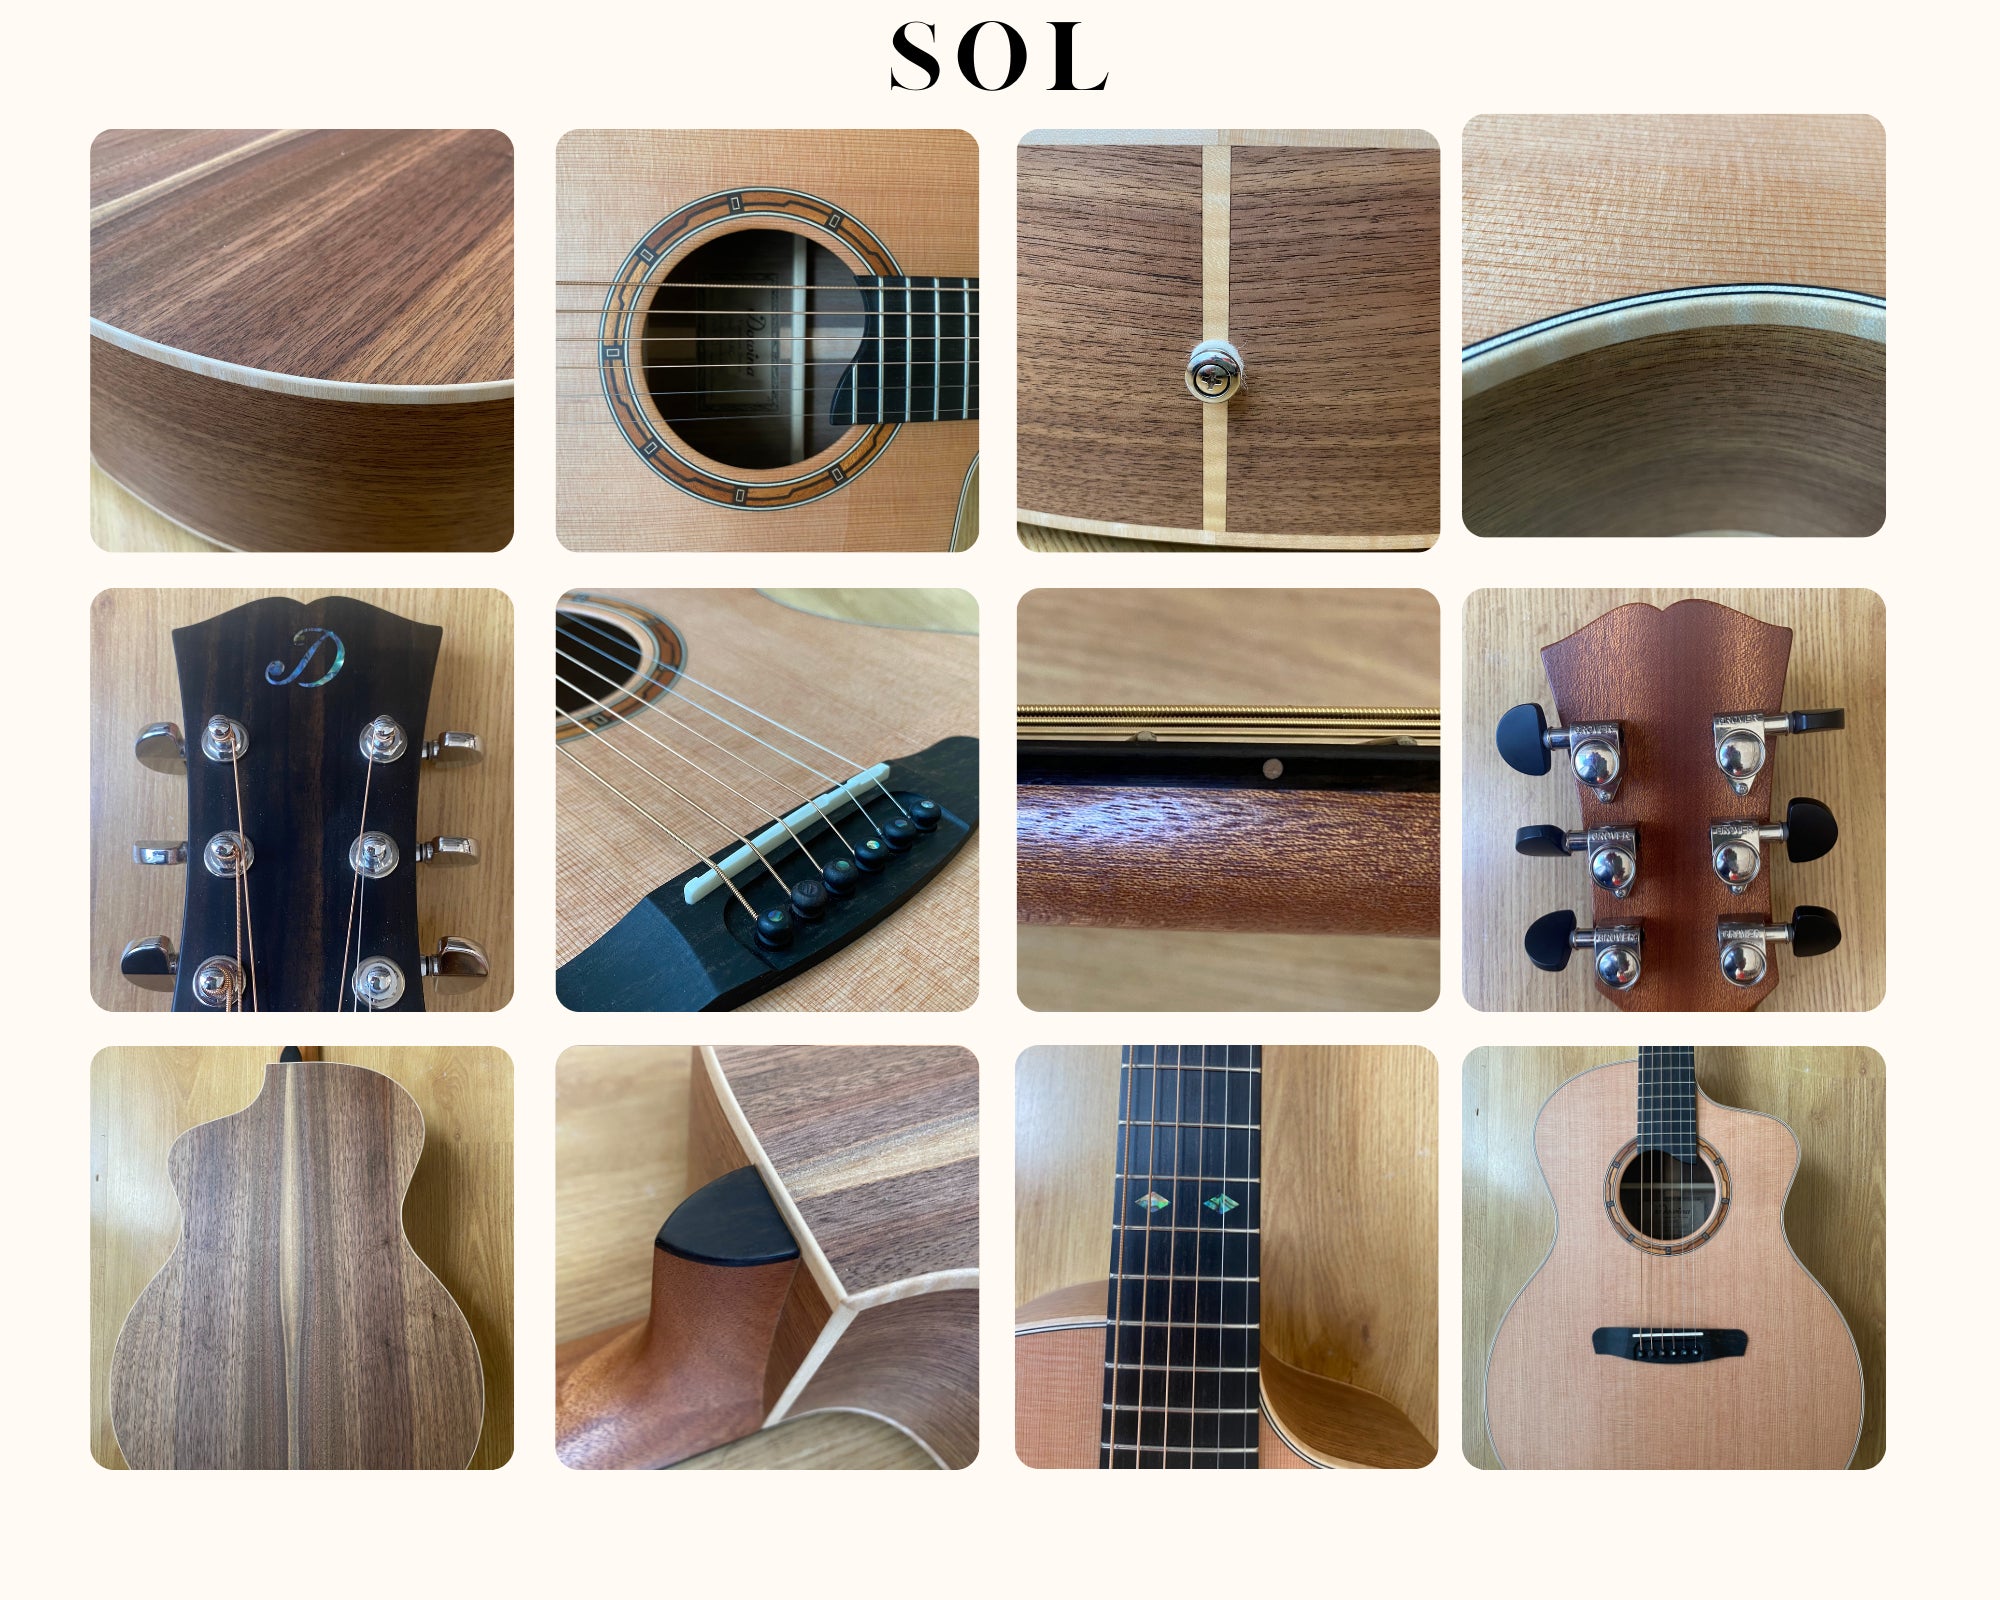 Dowina Walnut (Sol)  BVH, Nylon Strung Guitar for sale at Richards Guitars.